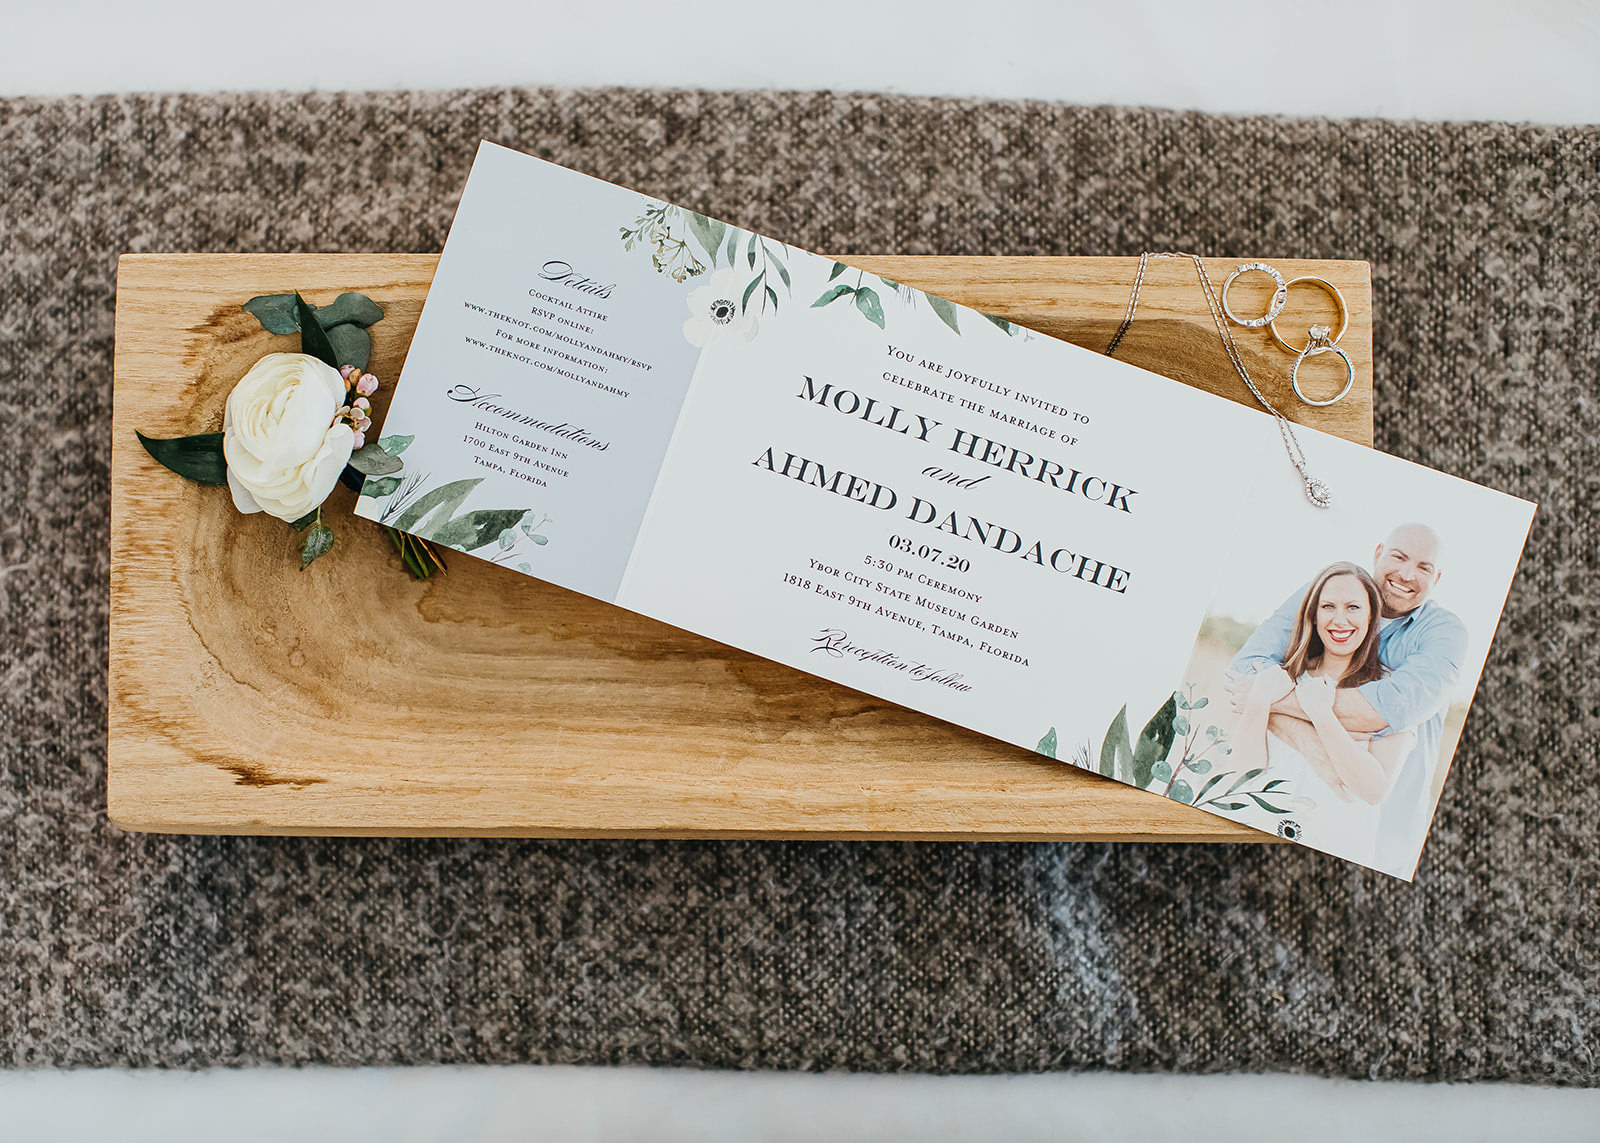 Ybor City Tampa Wedding Photo Invitation with Eucalyptus Greenery Motif